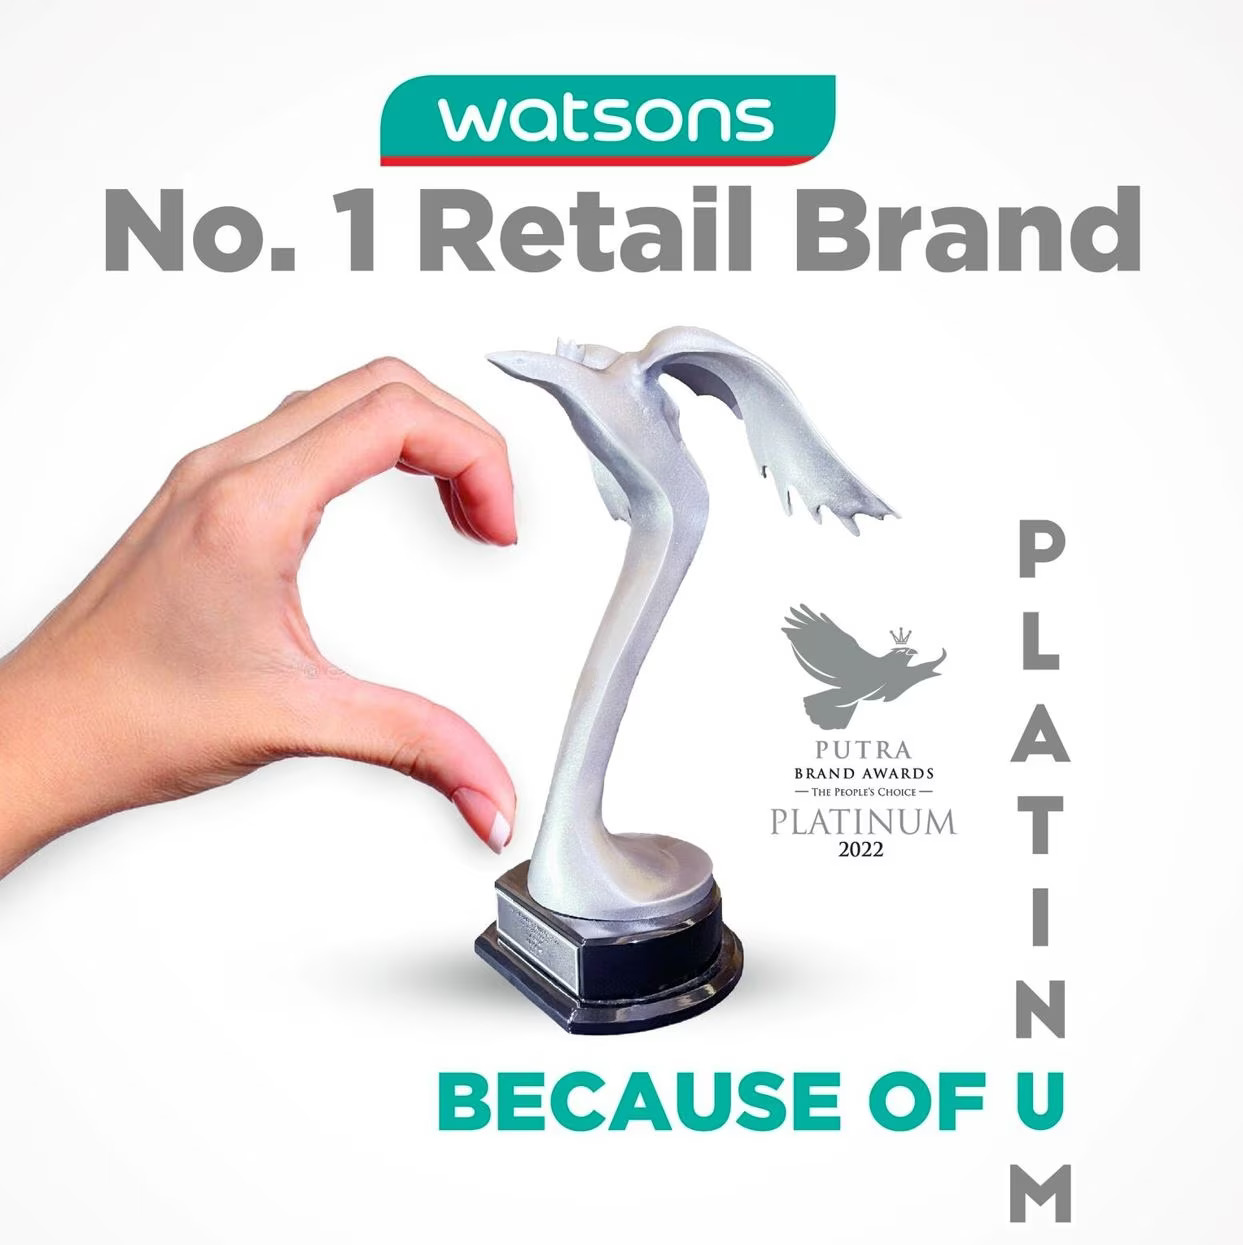 Watsons putra brand awards - platinum 2022